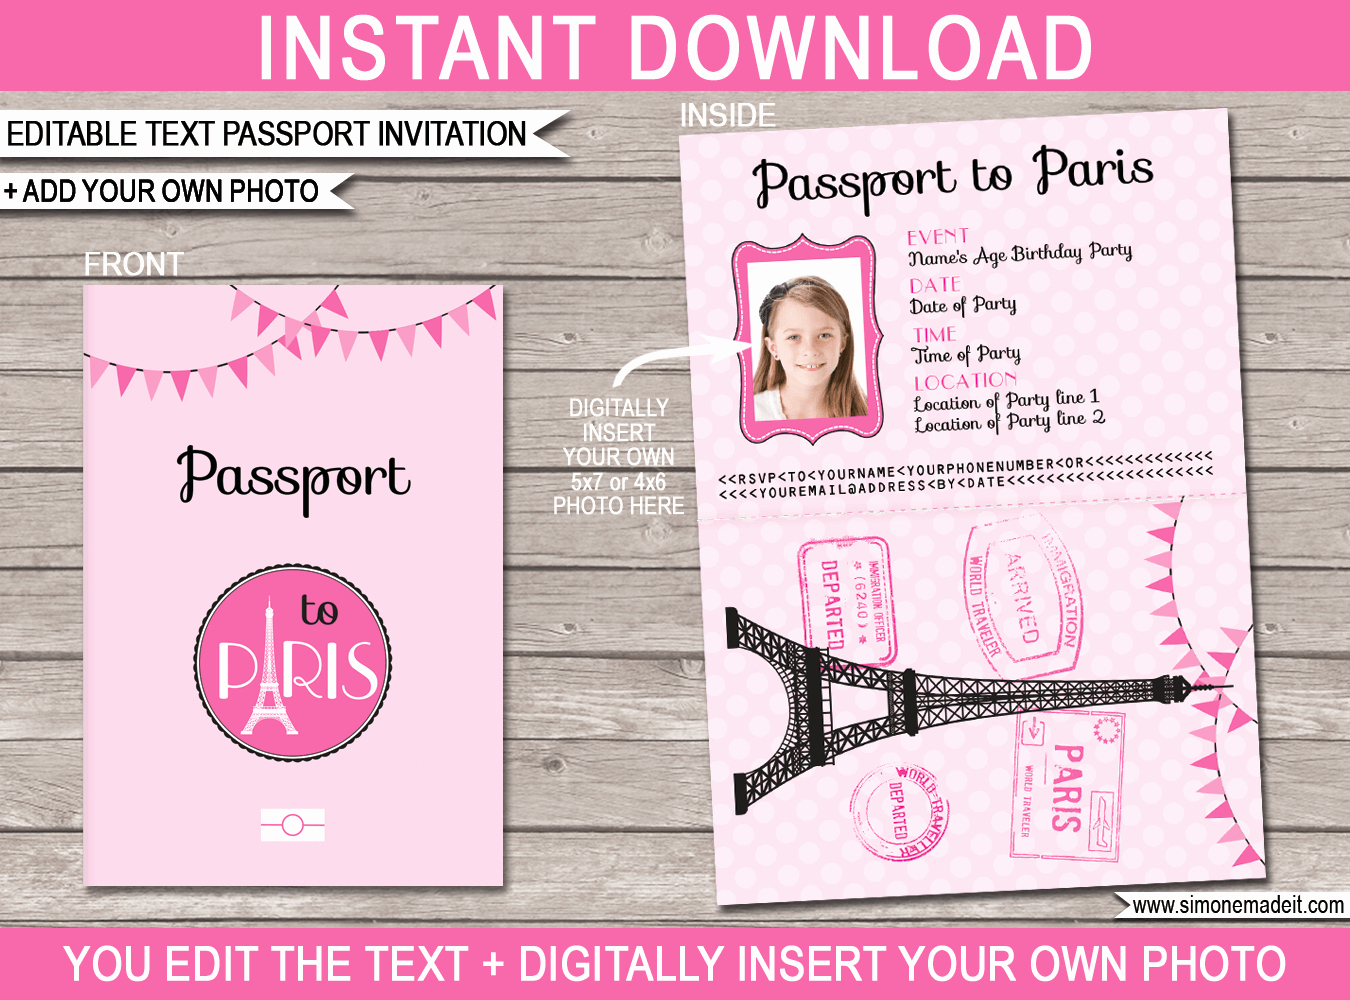 Passport Invitation Template Free New Paris Passport Invitation Template with Photo